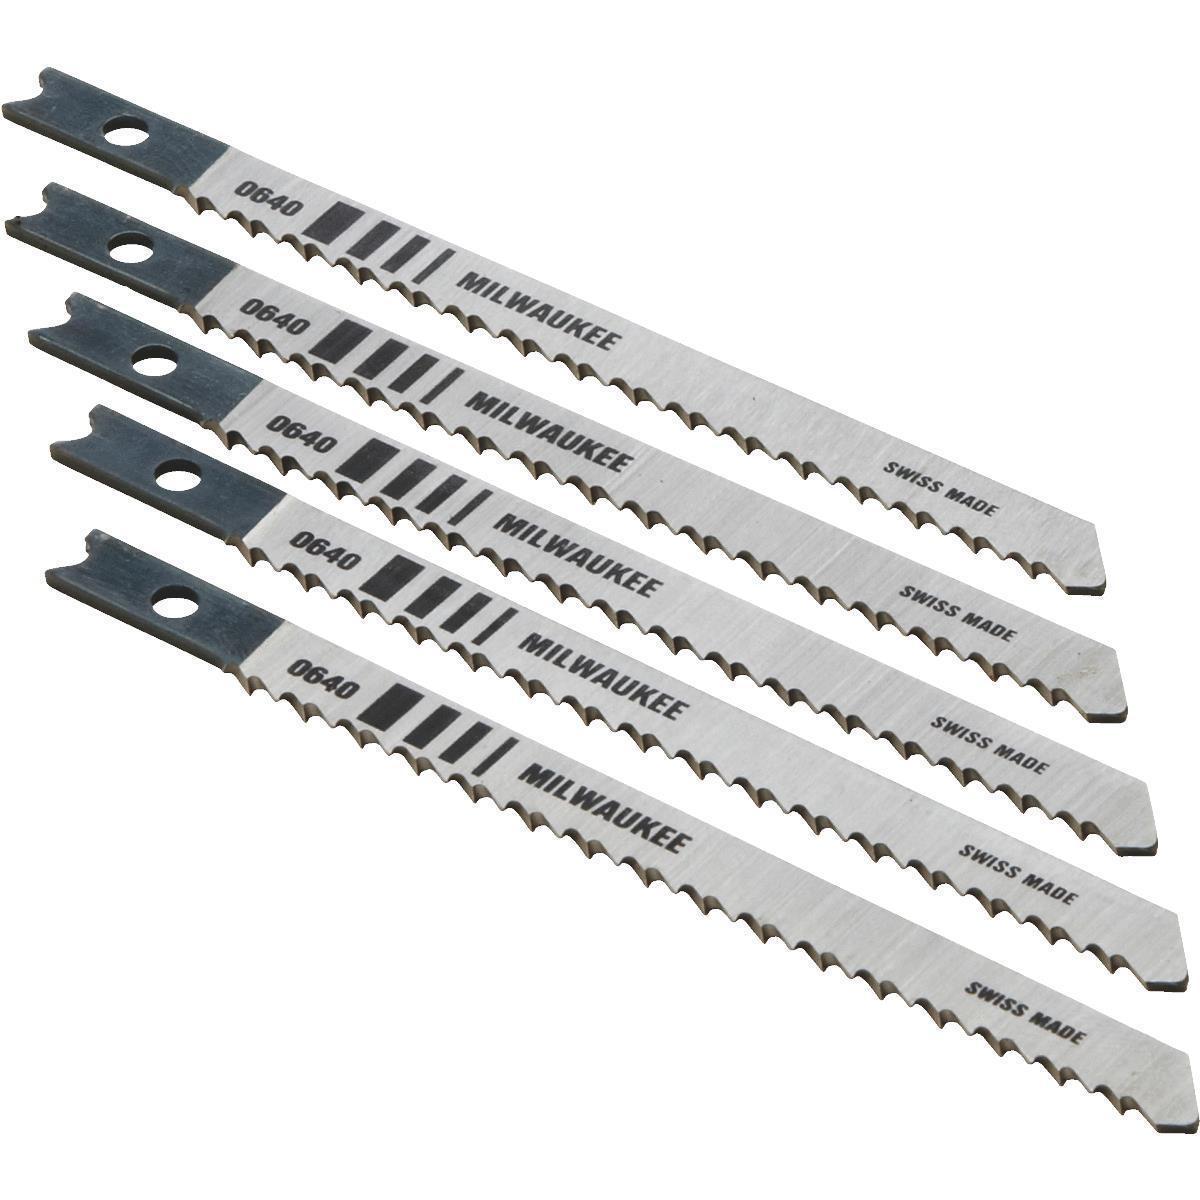 Milwaukee 48-42-0640 4" x 10 TPI U-Shank Wood Cutting HCS Jigsaw Blades 5 Pack